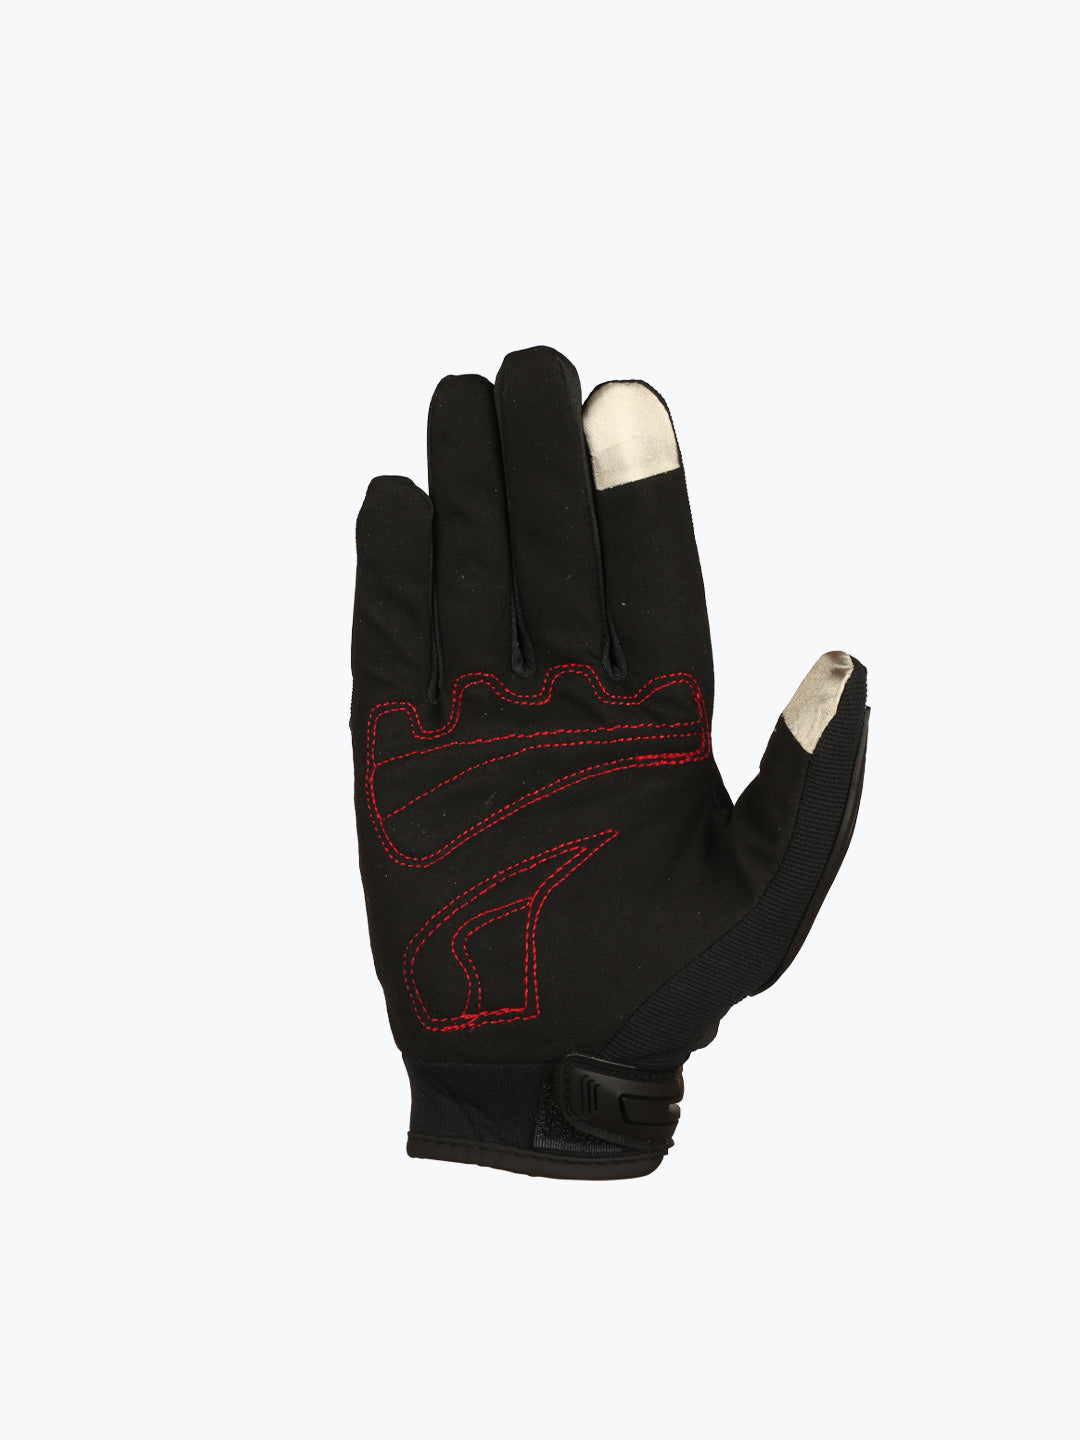 BSDDP Gloves A0135 Red